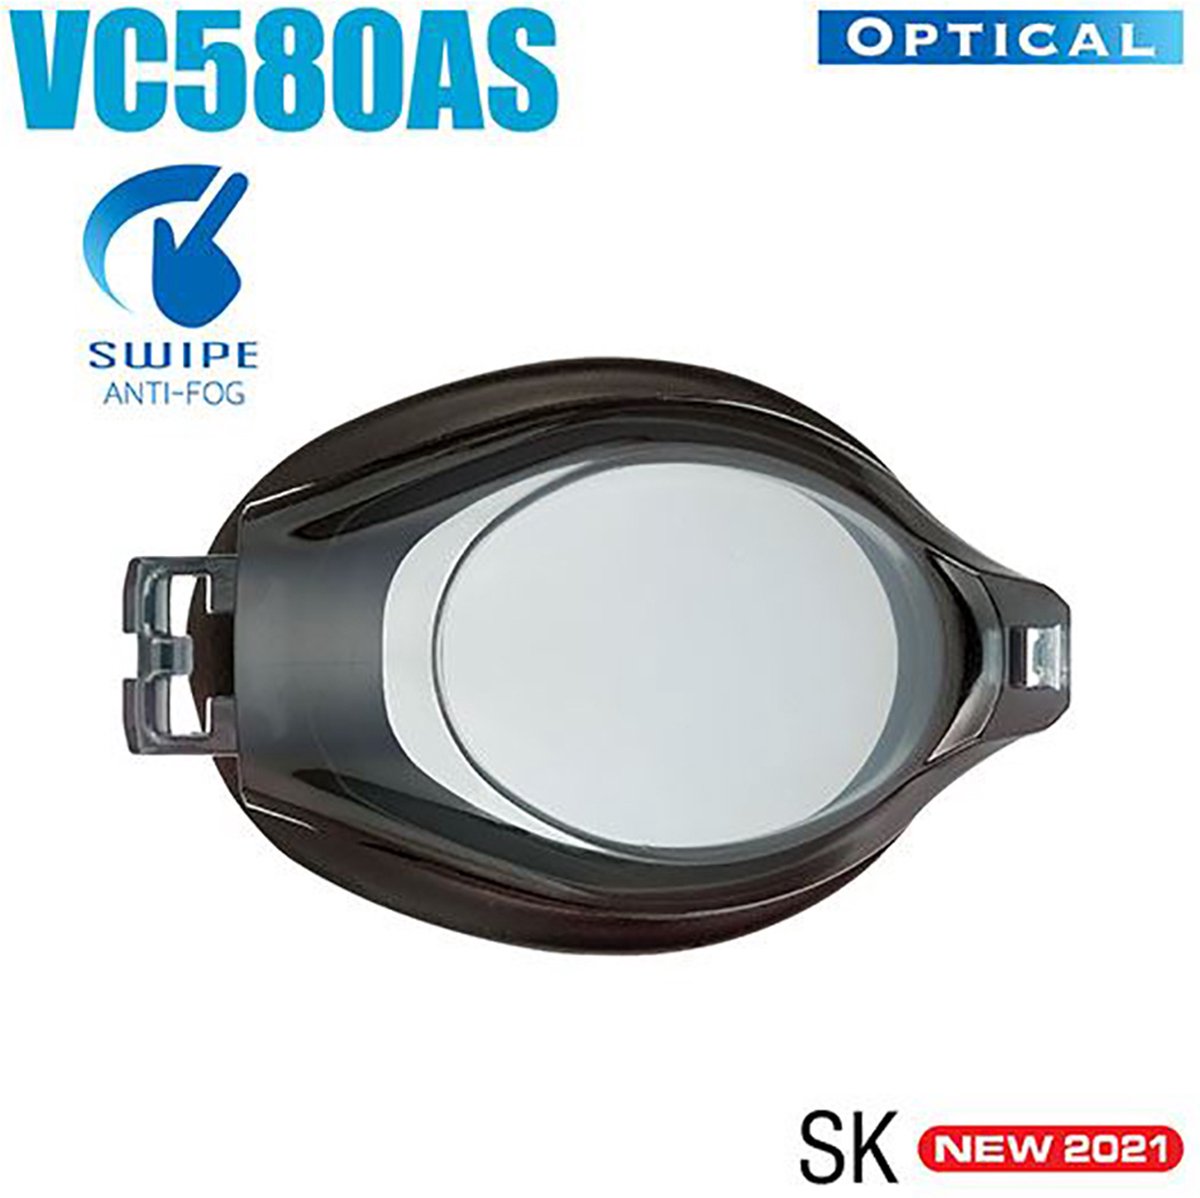 VIEW zwembril lens met SWIPE technologie VC580AS Sterkte -6.5 kleur zwart